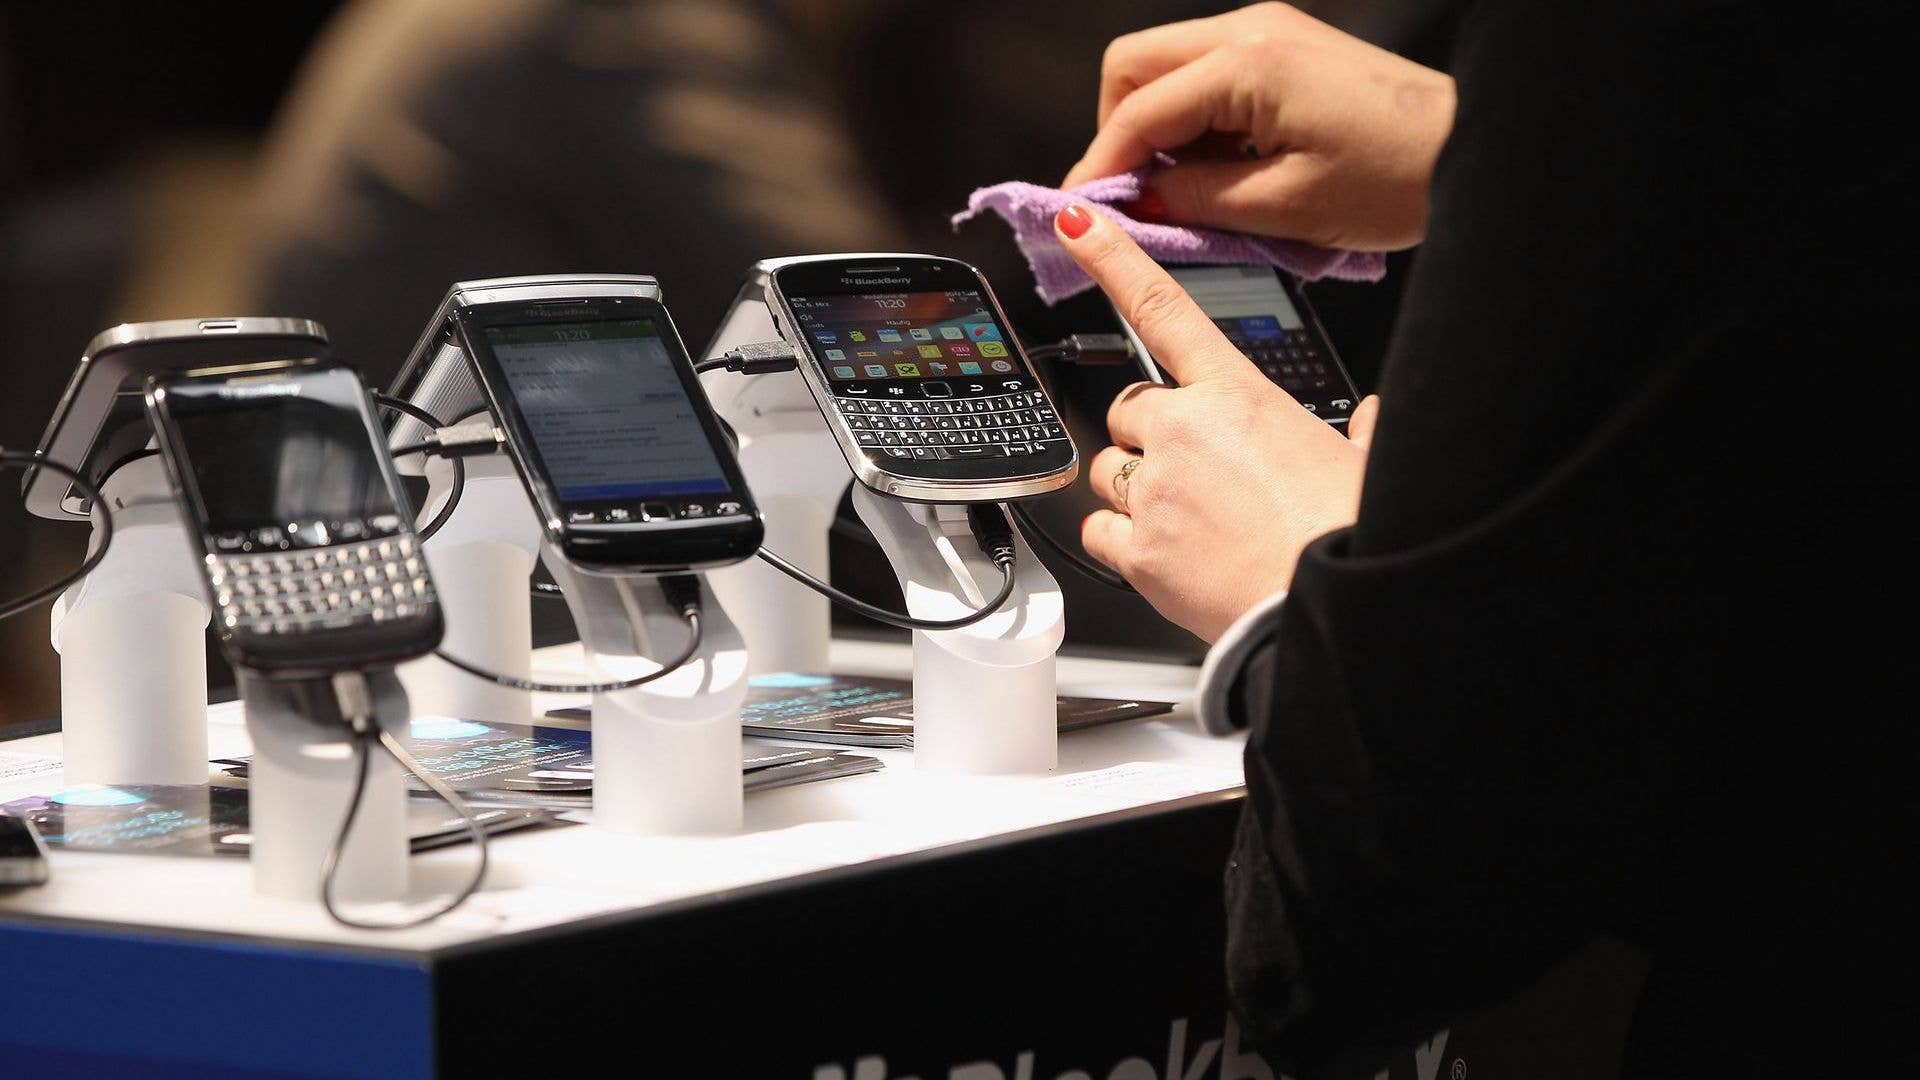 BlackBerry phones on display at CeBIT 2012 technology trade fair